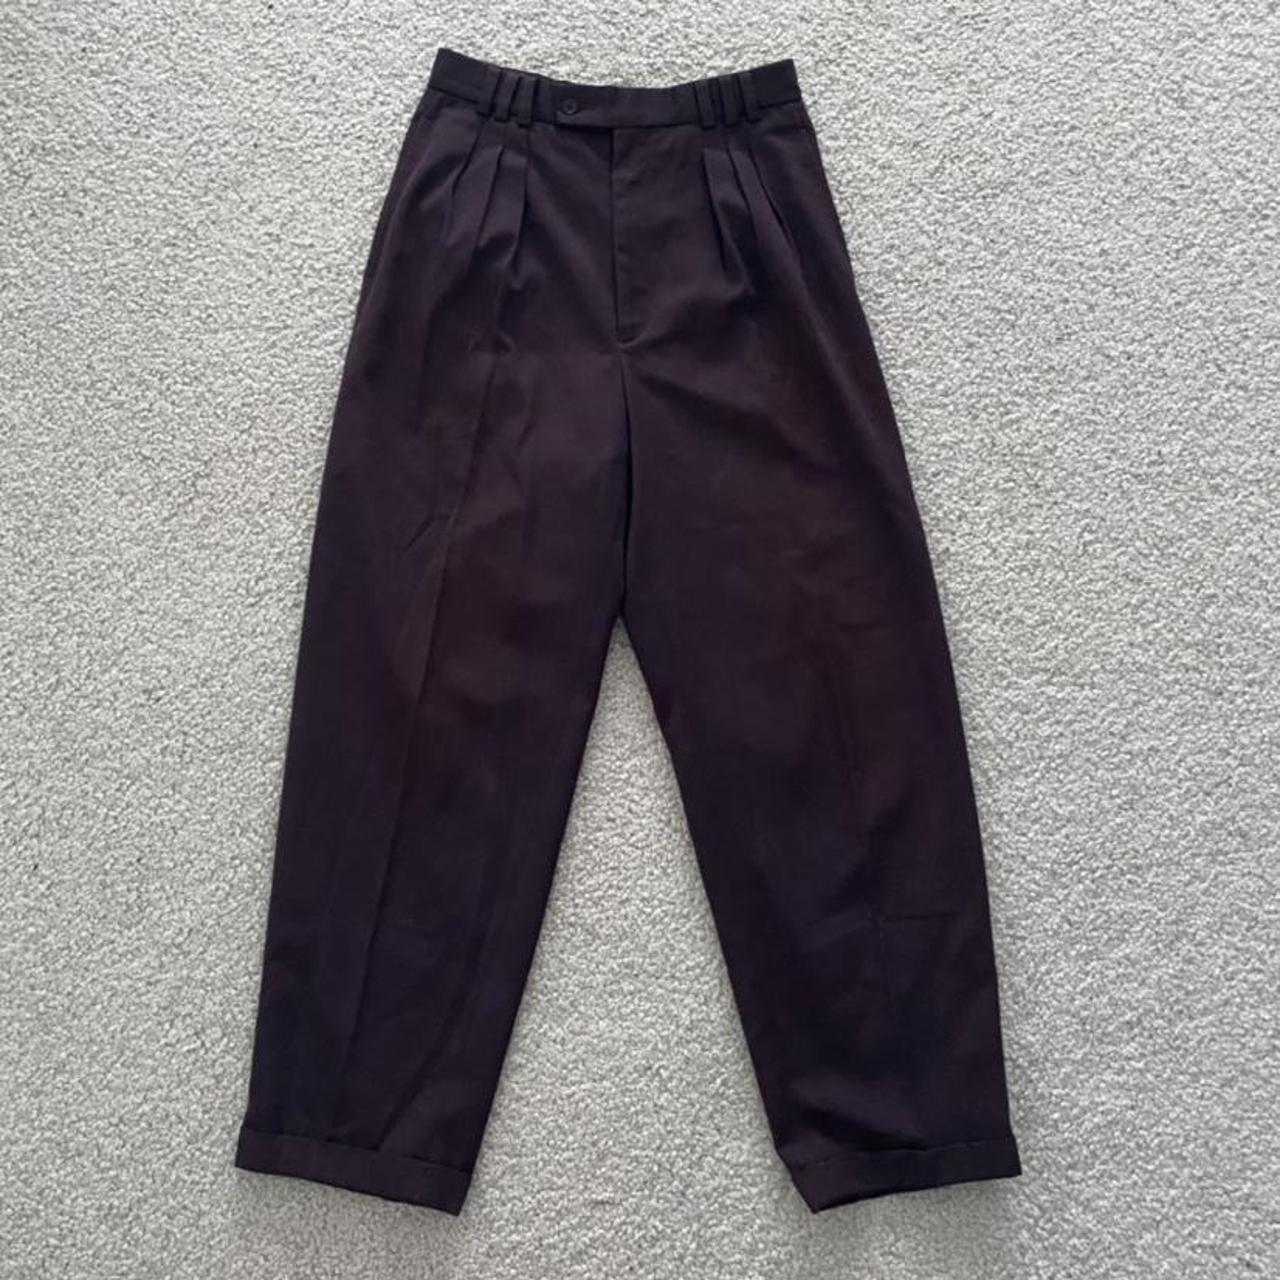 Deep purple high waisted dress pants (can be dressed... - Depop